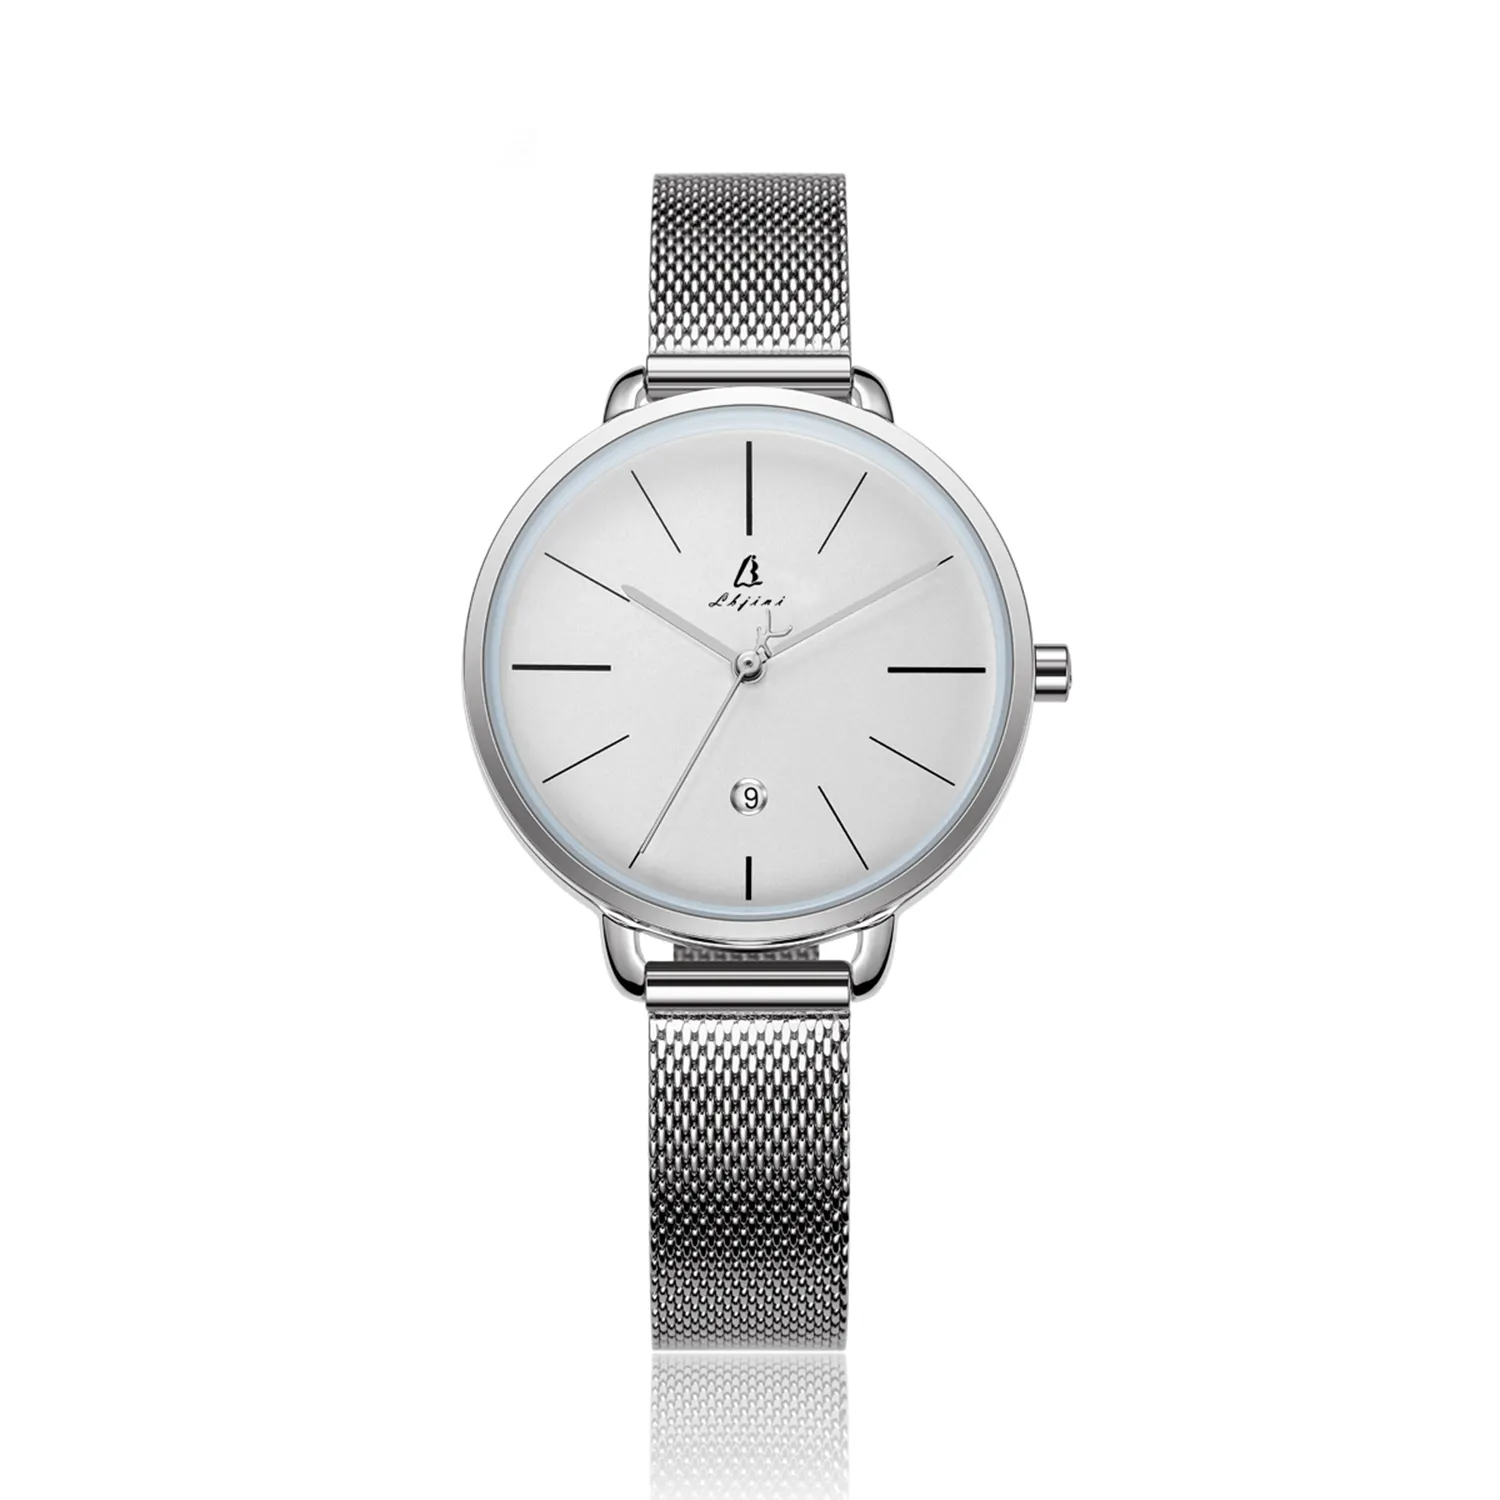 KETINY jam tangan wanita, tahan air jam tangan gaun kualitas tinggi pabrik profesional grosir jam tangan wanita Drop-shopping 20cm